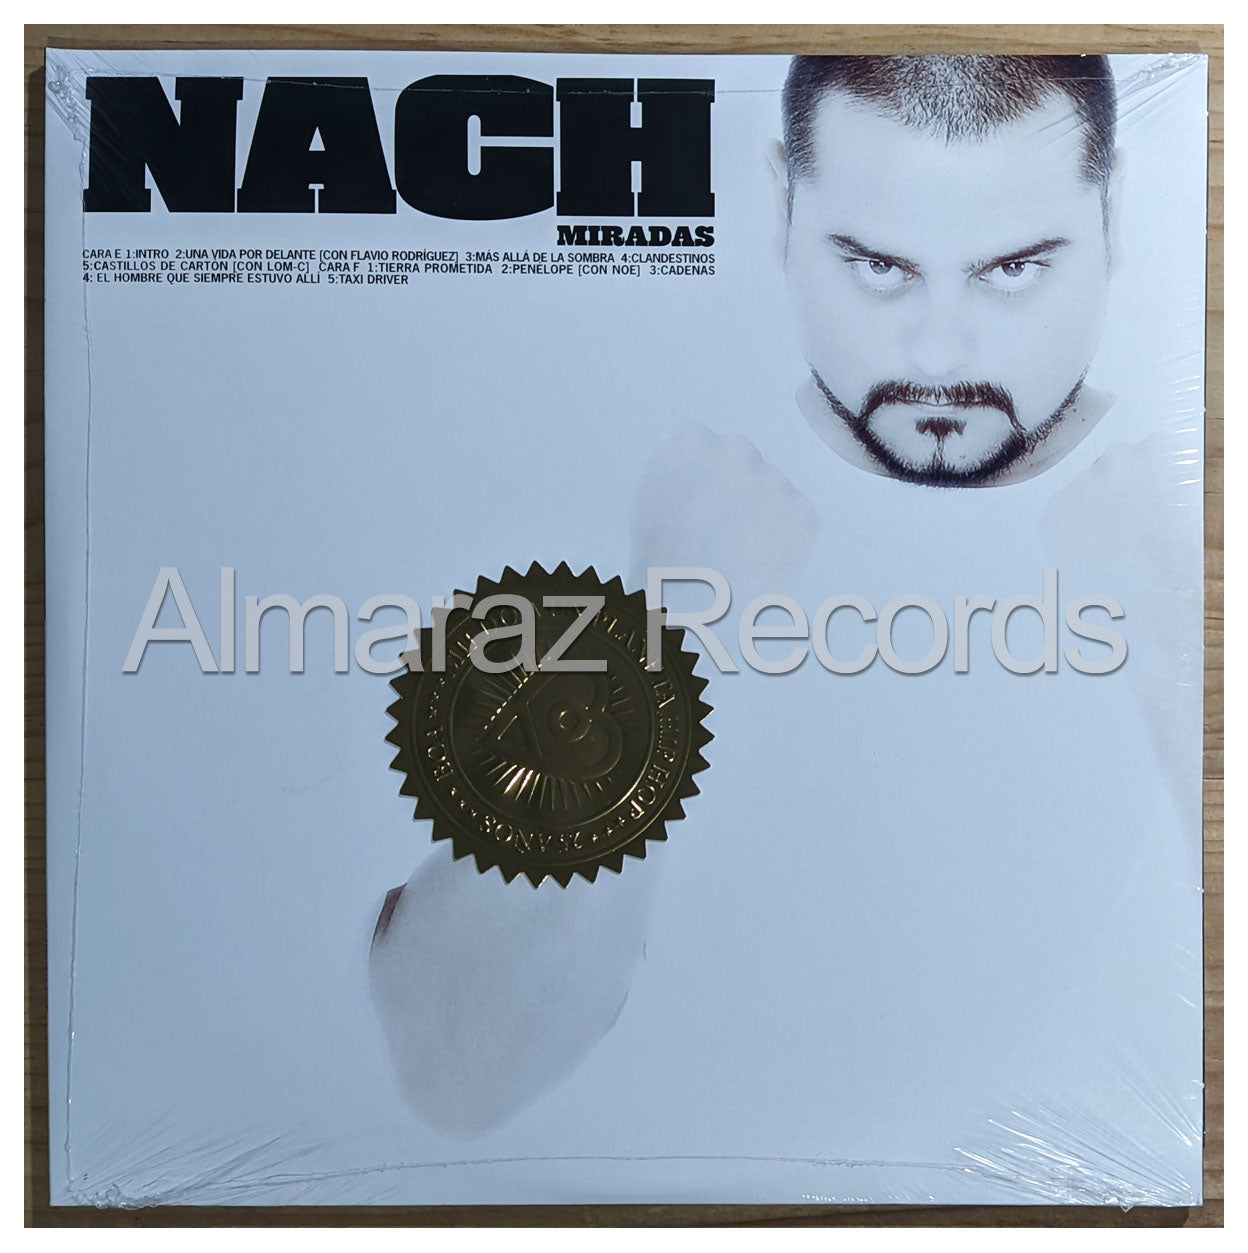 Nach Ars Magna/Miradas Vinyl LP